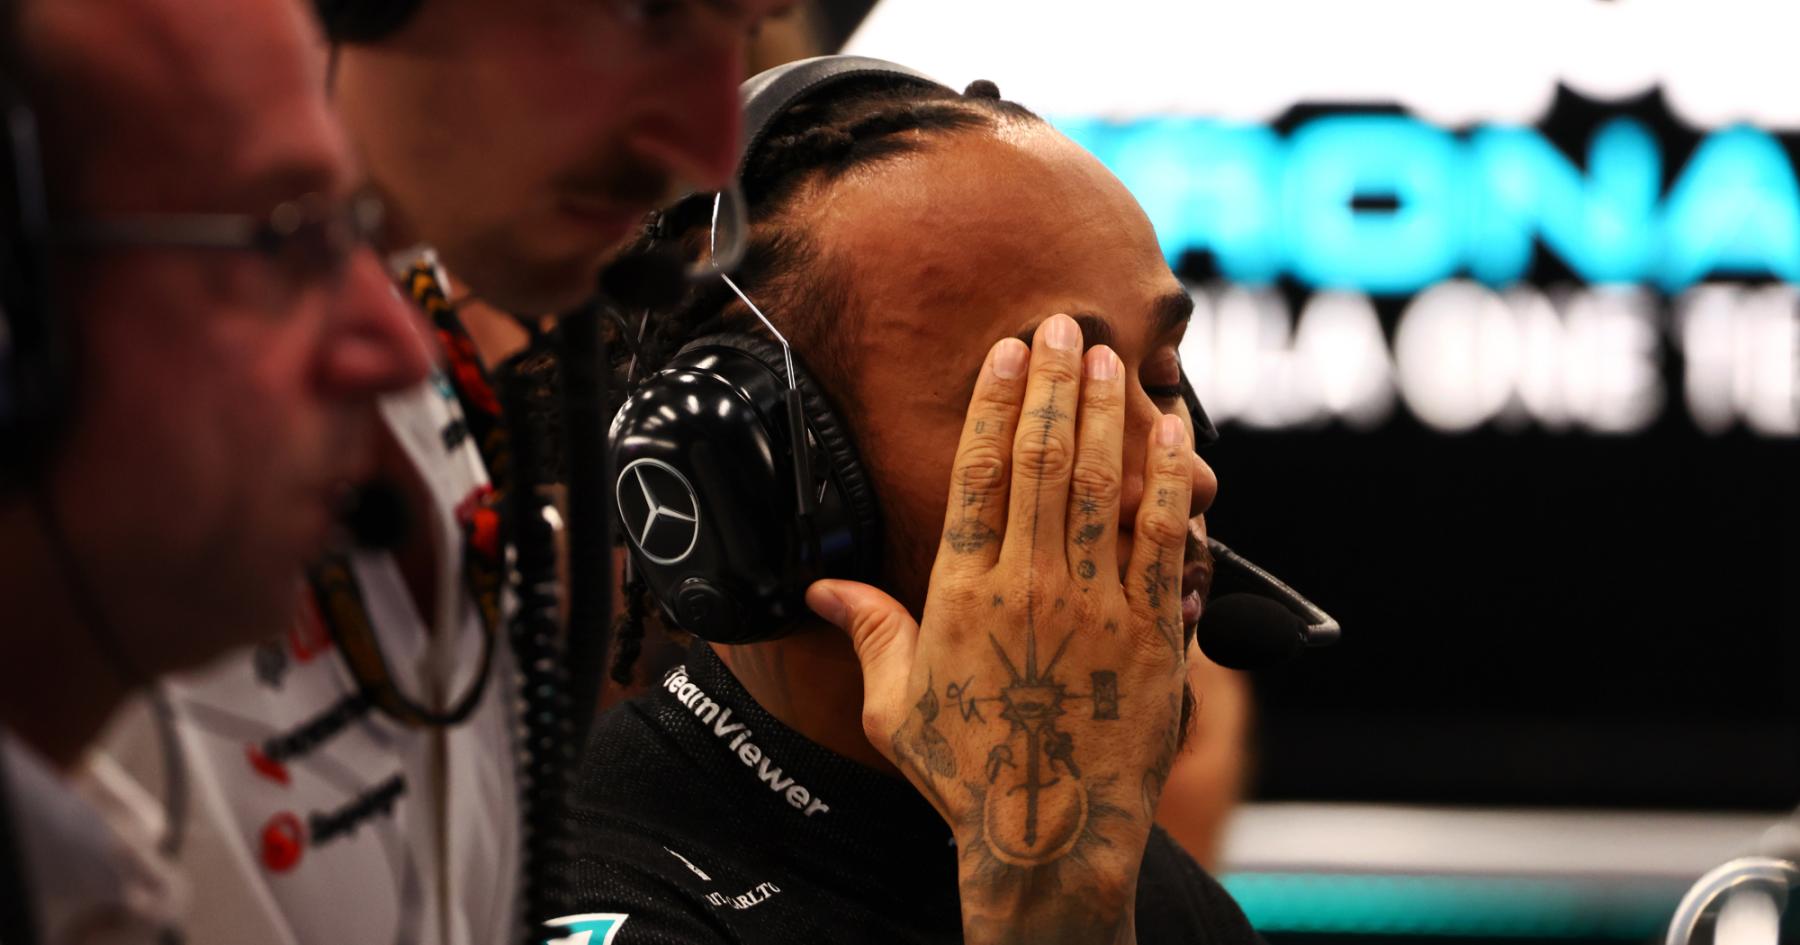 Hamilton in Mercedes vow ahead of final season